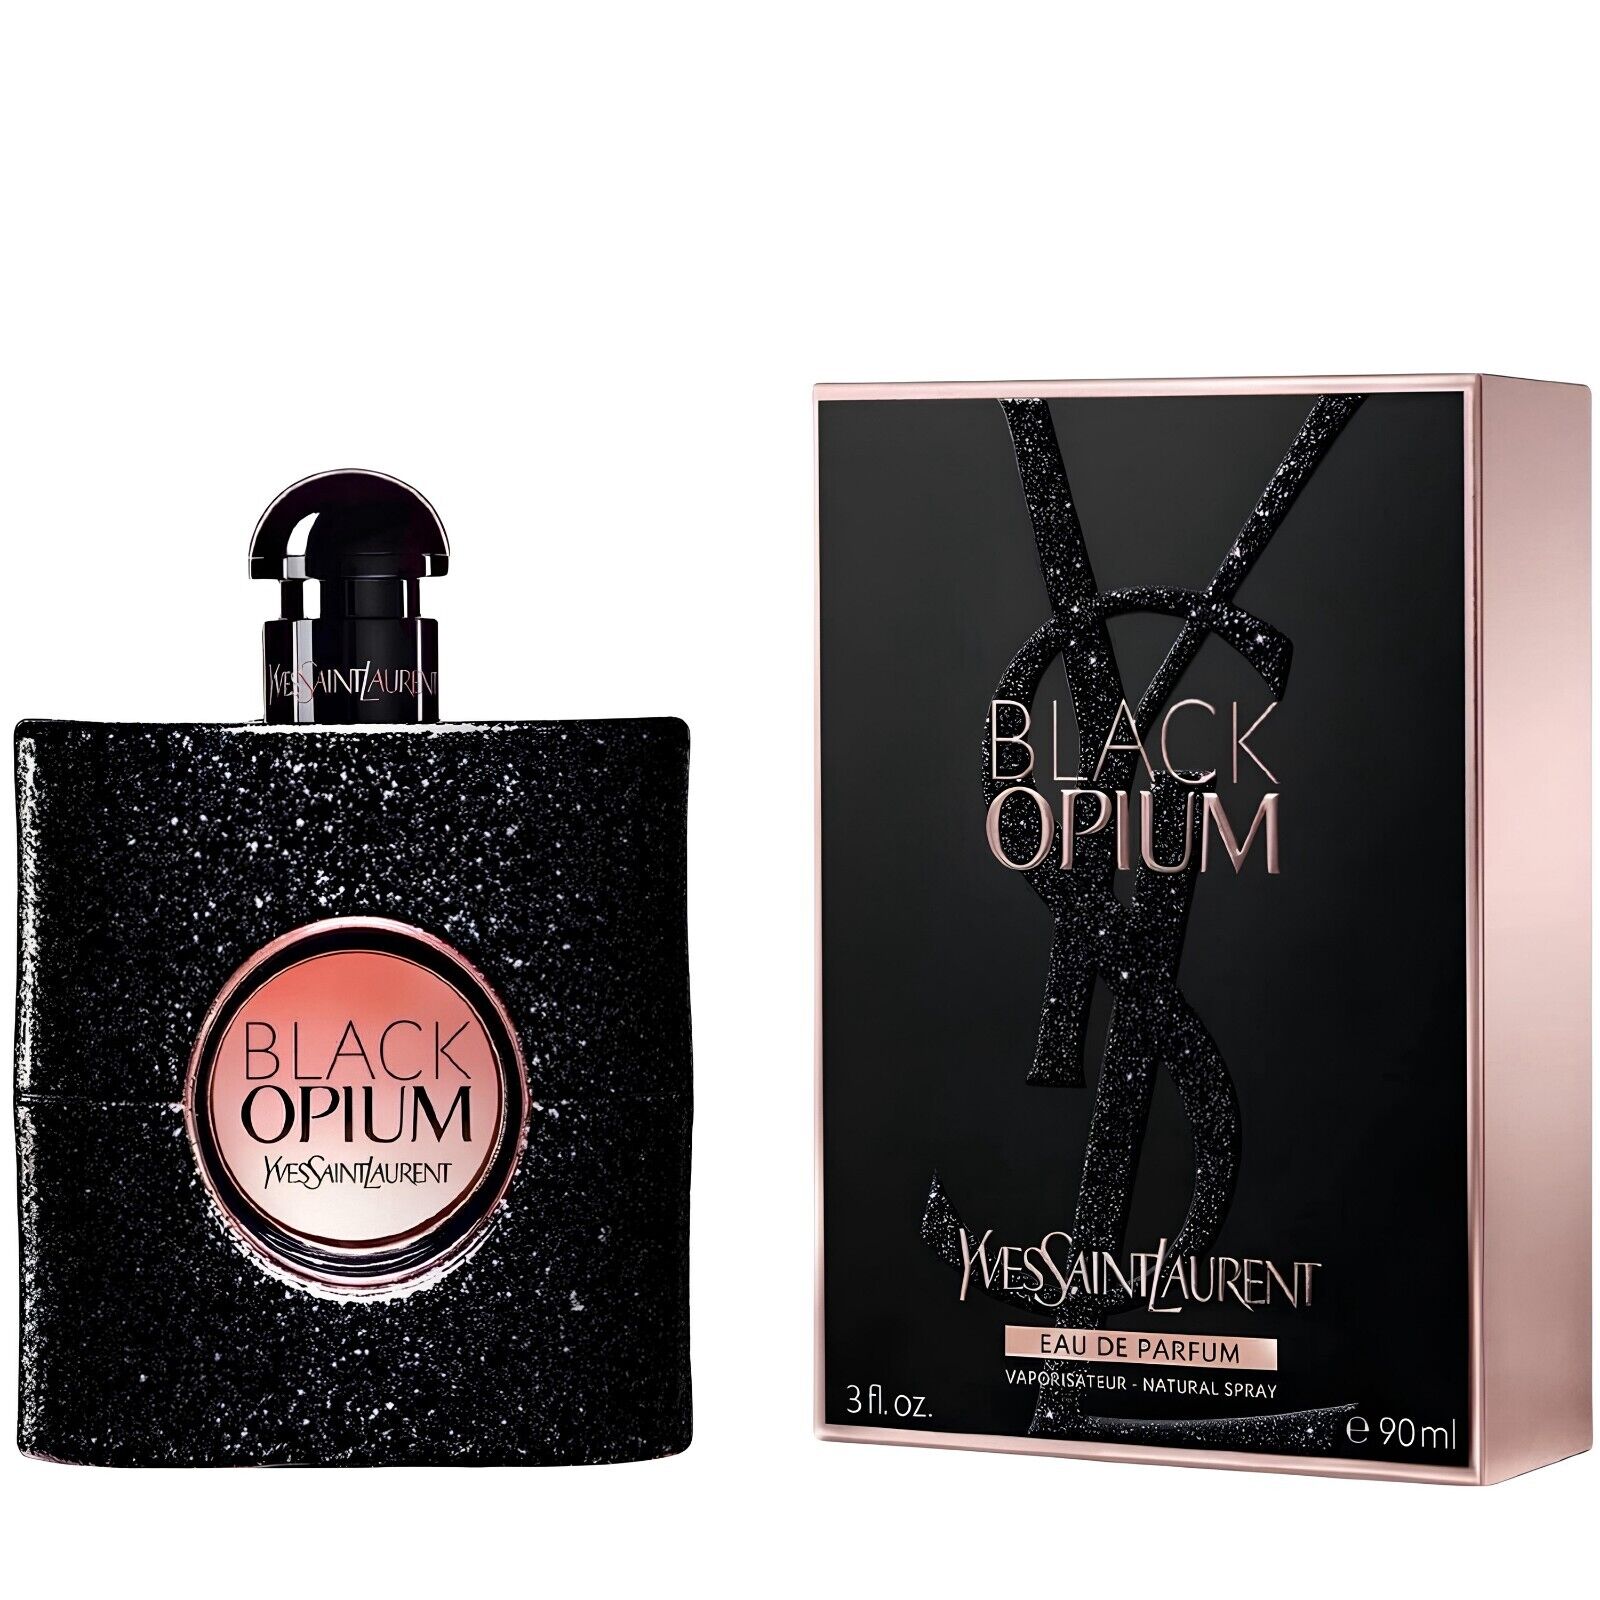 New Yv.e.s Sa.int La-urent _Black -Opium Eau De Parfum Spray 90 ml 3 Oz EDP